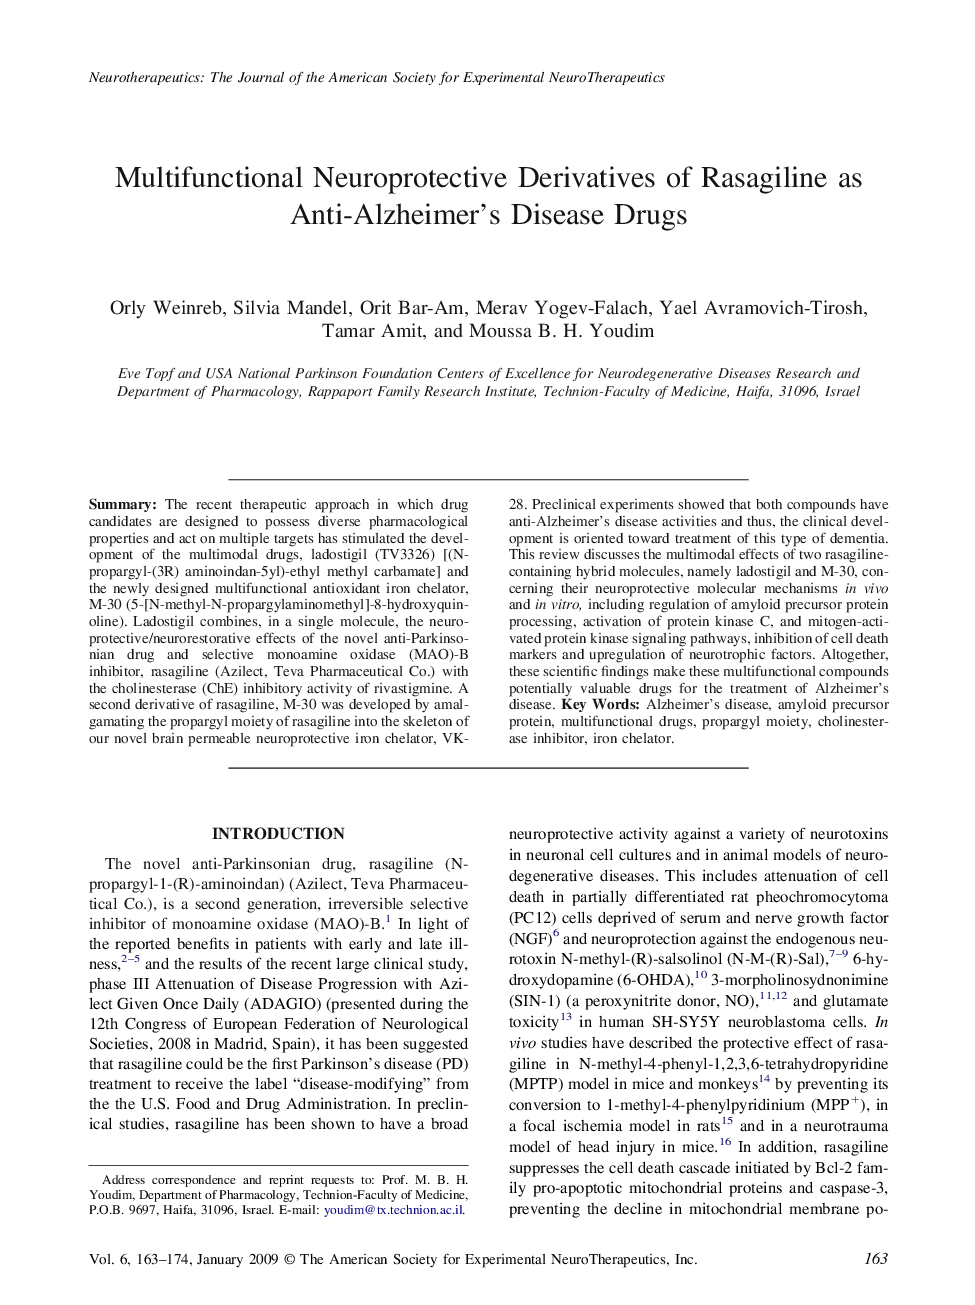 Multifunctional Neuroprotective Derivatives of Rasagiline as Anti-Alzheimer's Disease Drugs